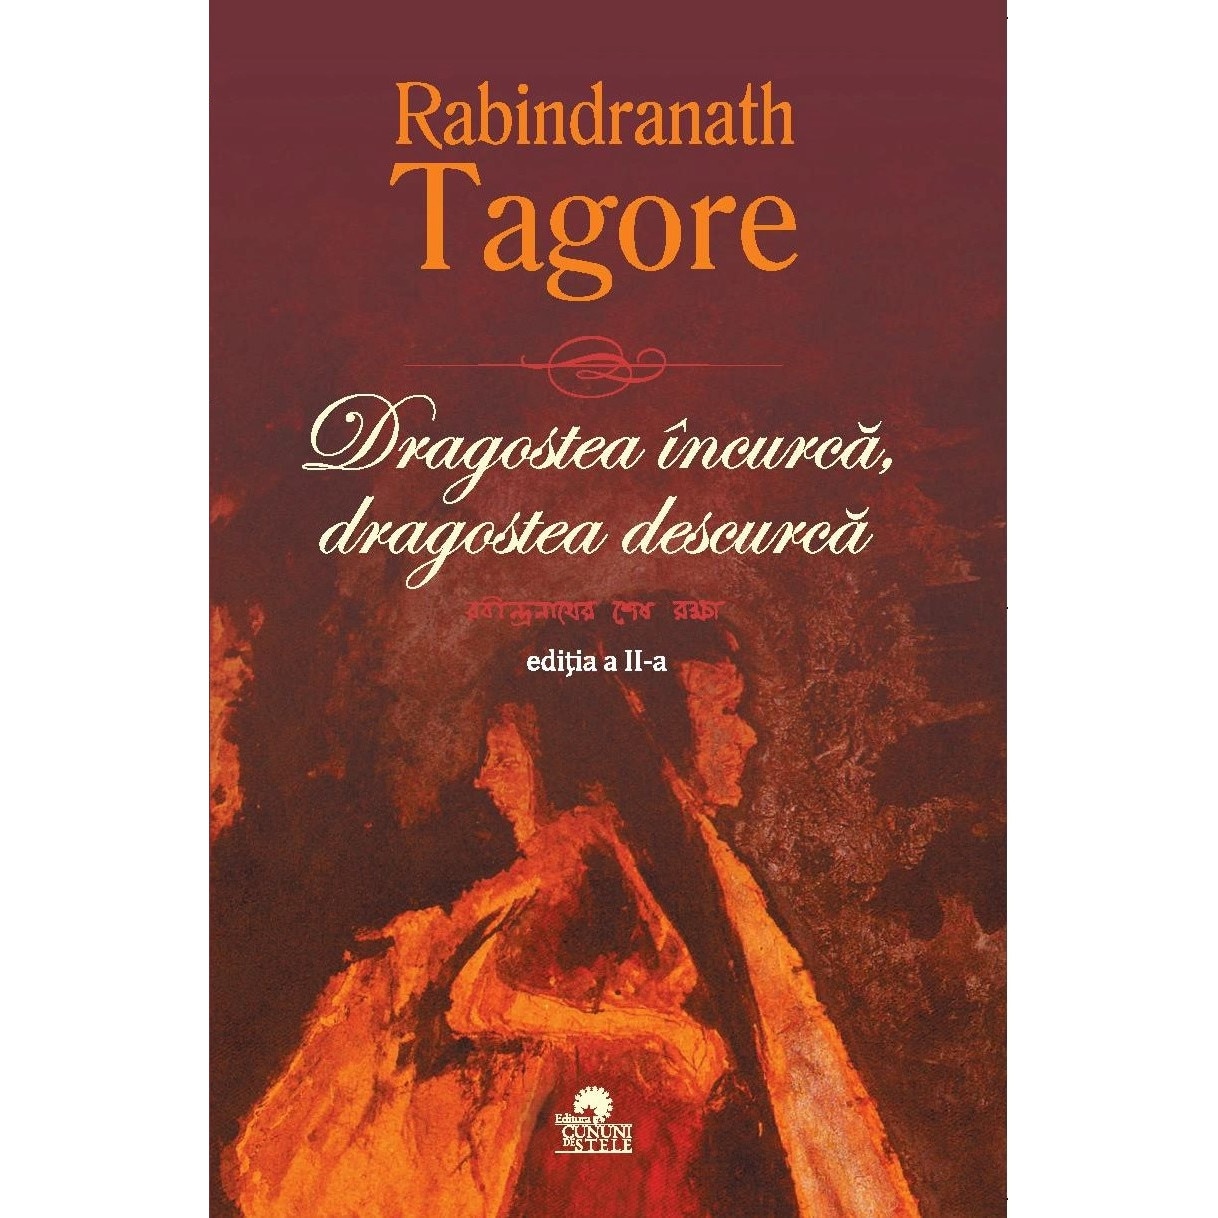 clergyman snow White dump Dragostea incurca, dragostea descurca - Rabindranath Tagore - eMAG.ro